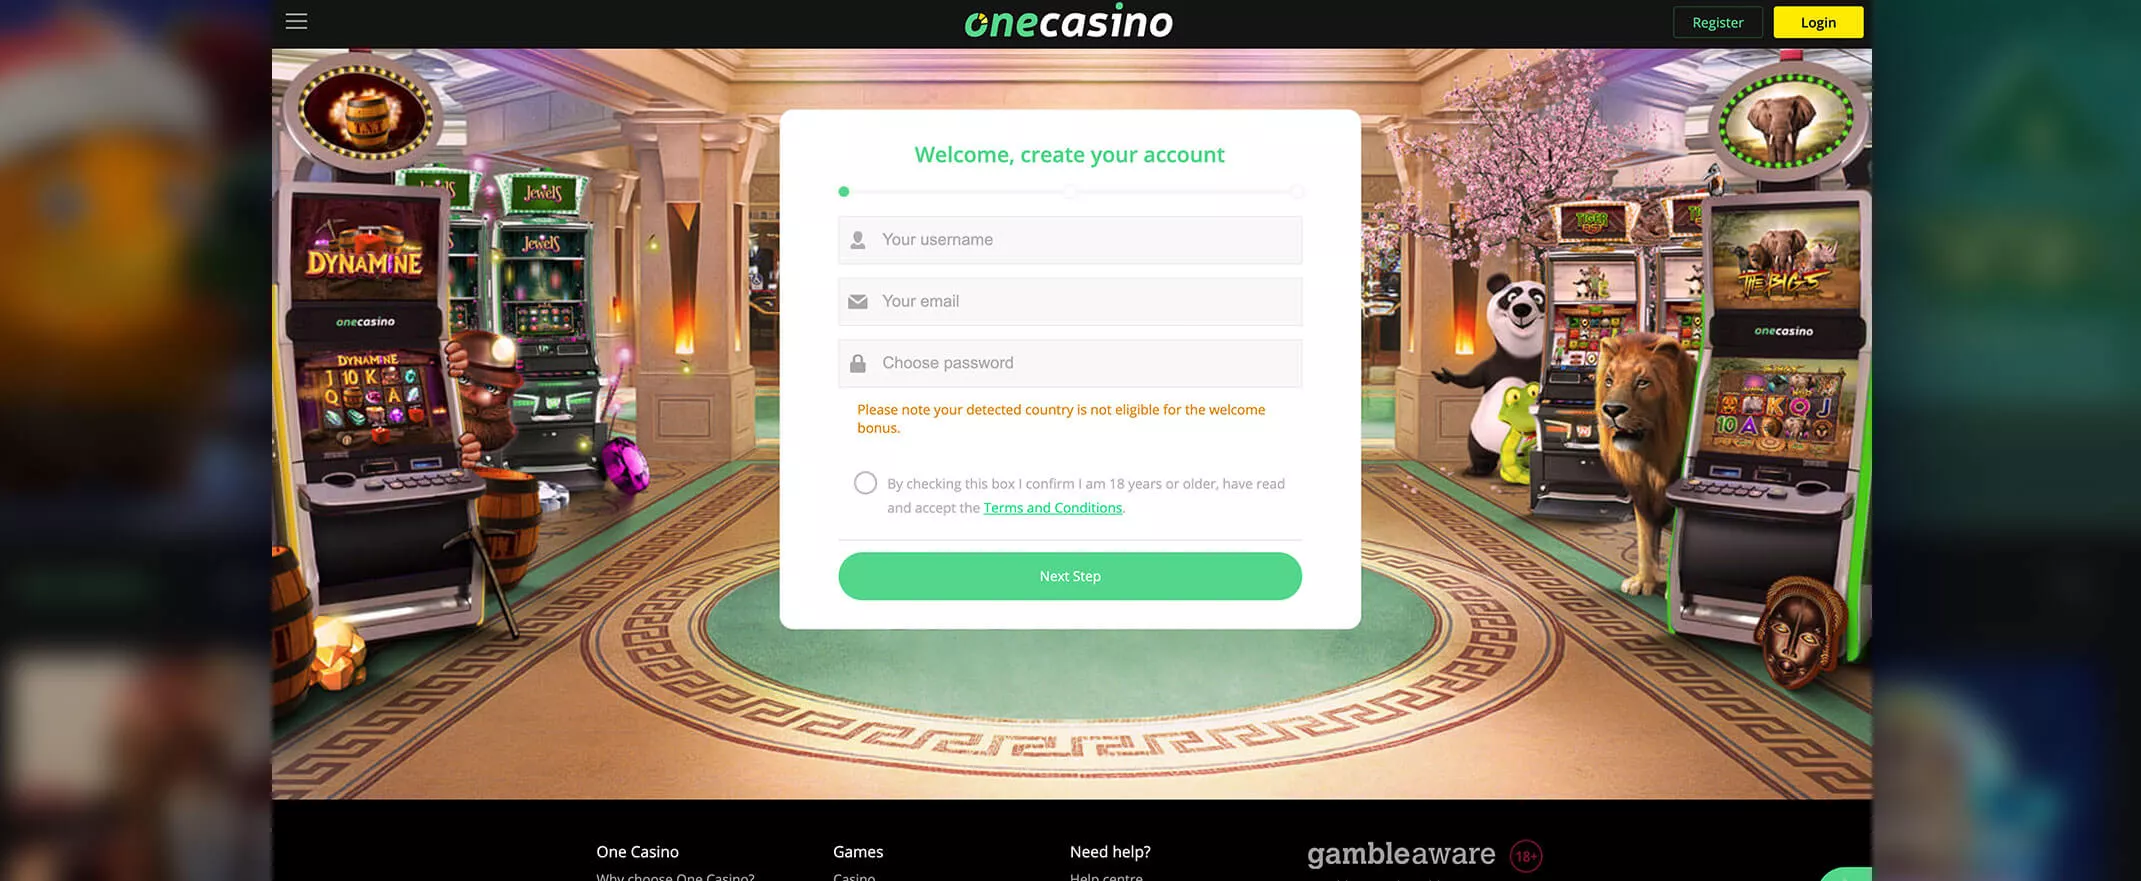 One Casino screenshot of the registration process